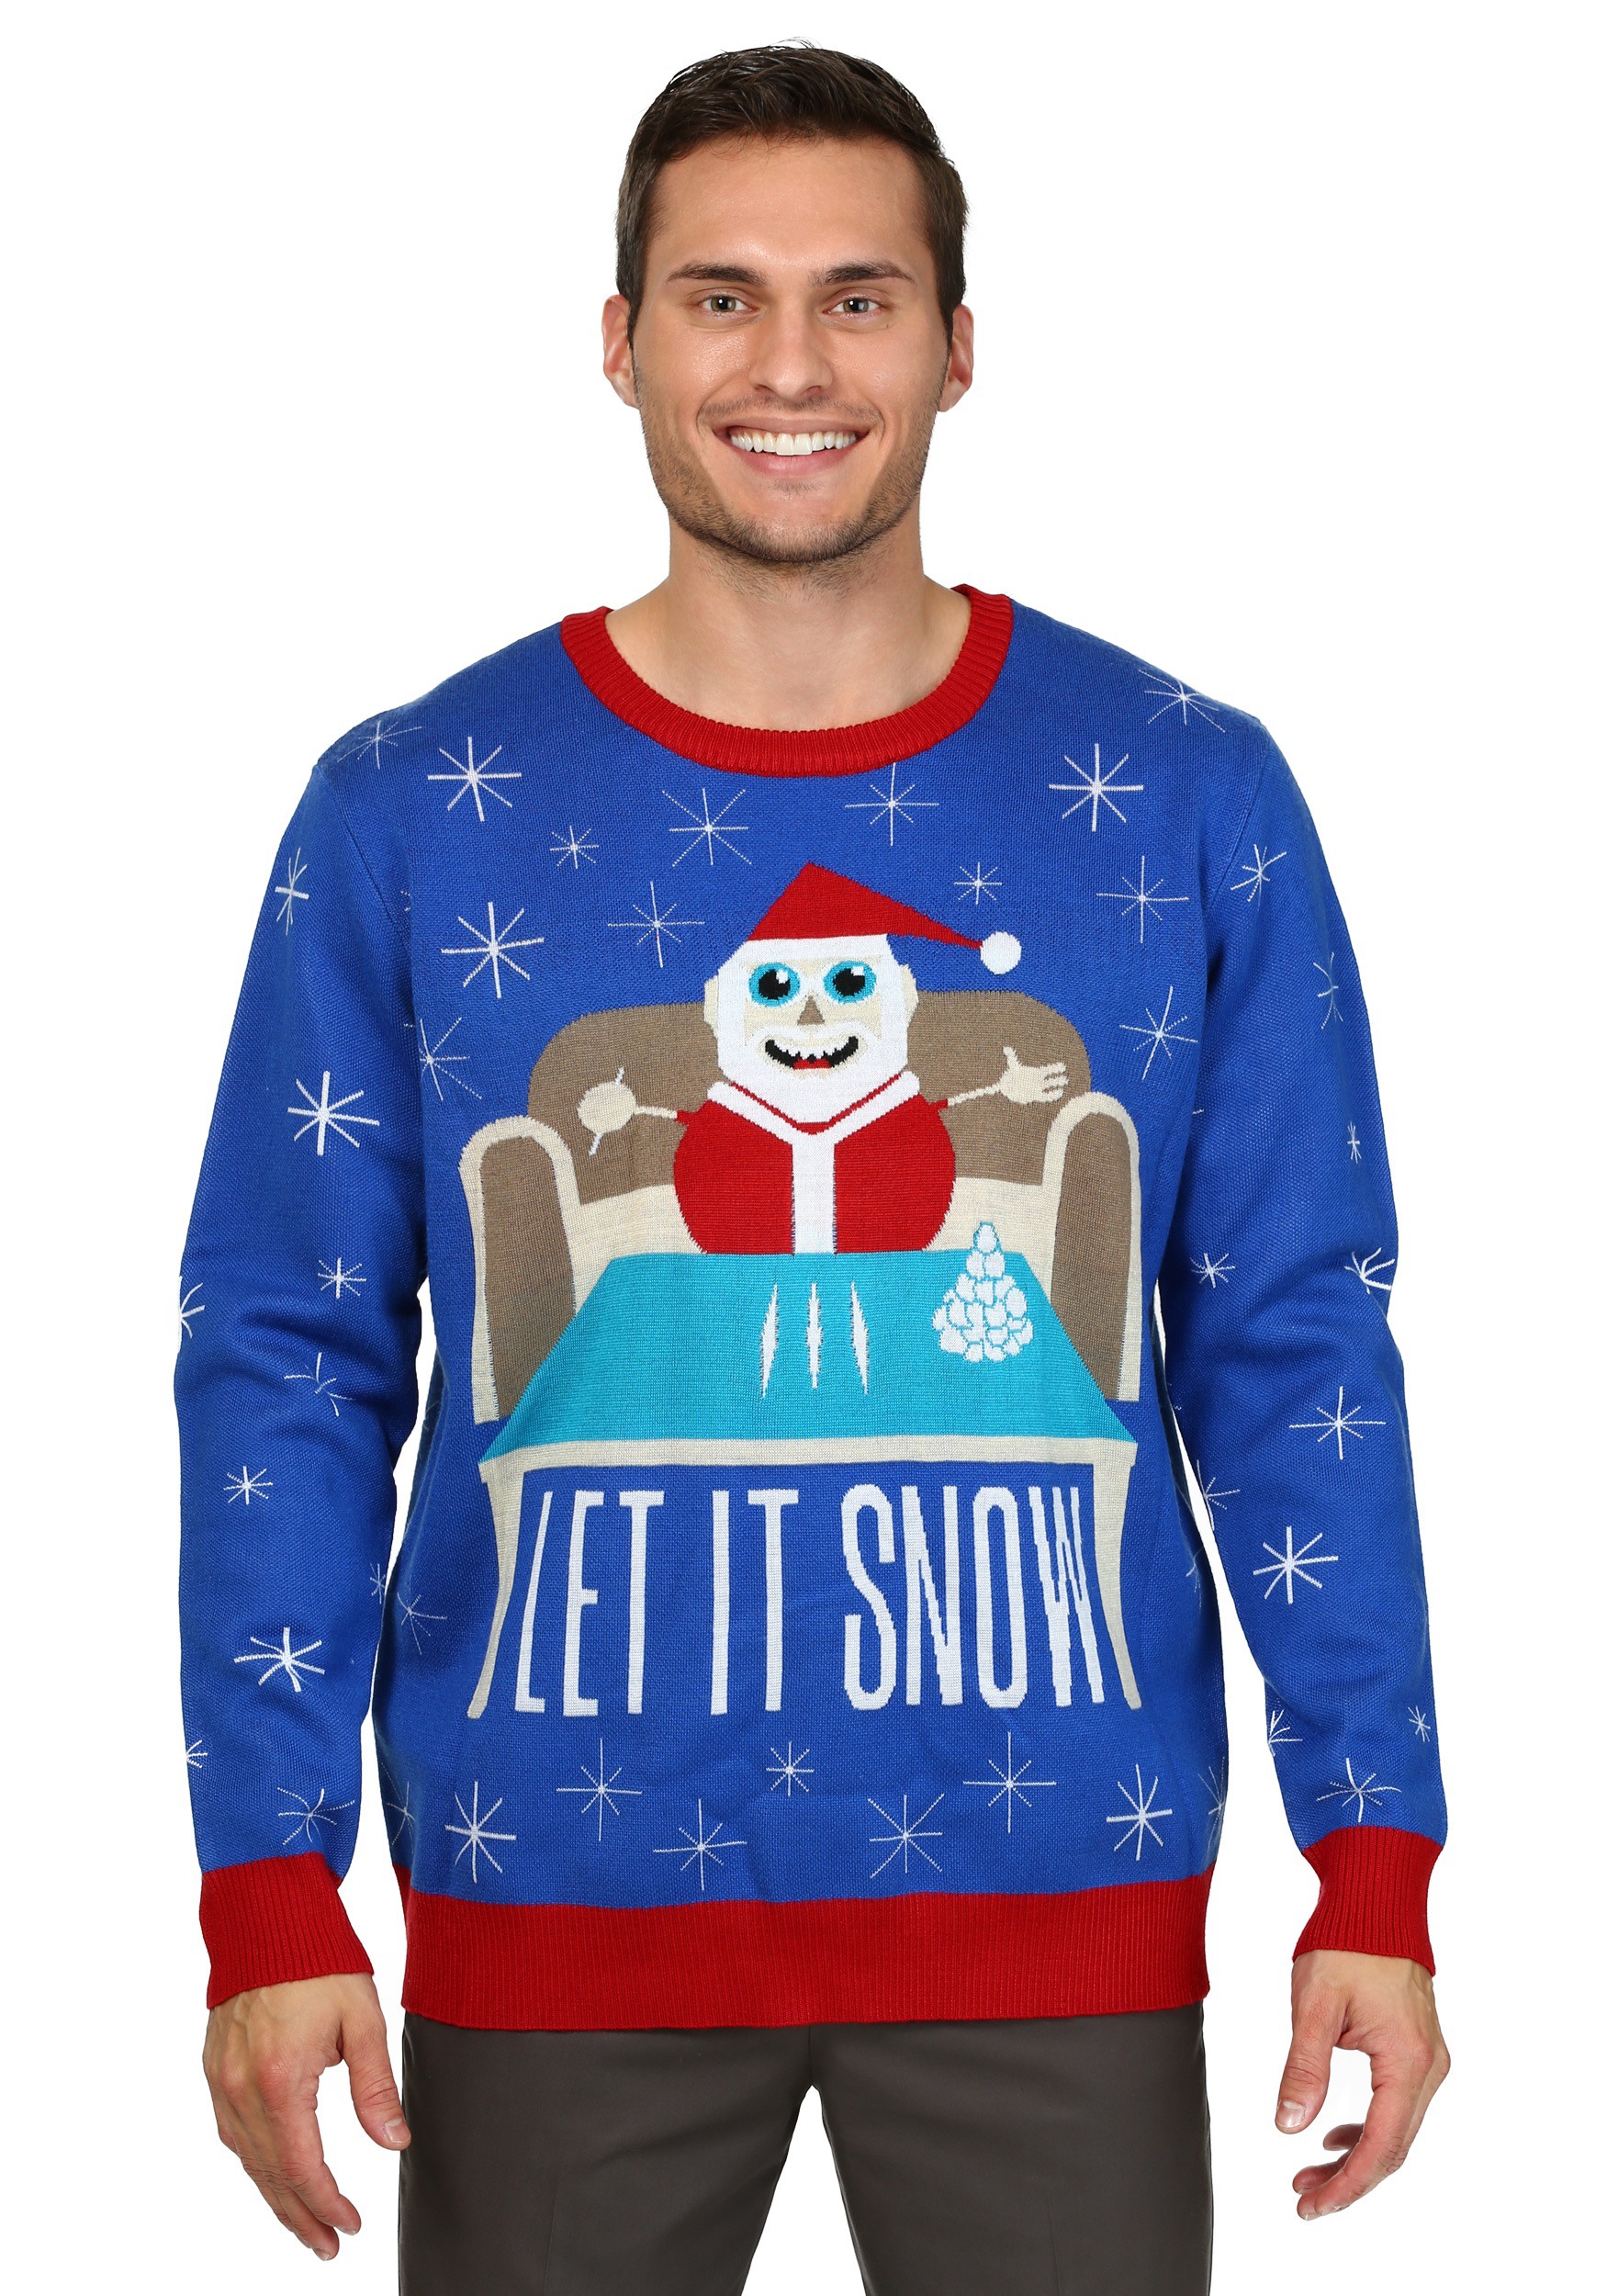 let it snow sweater